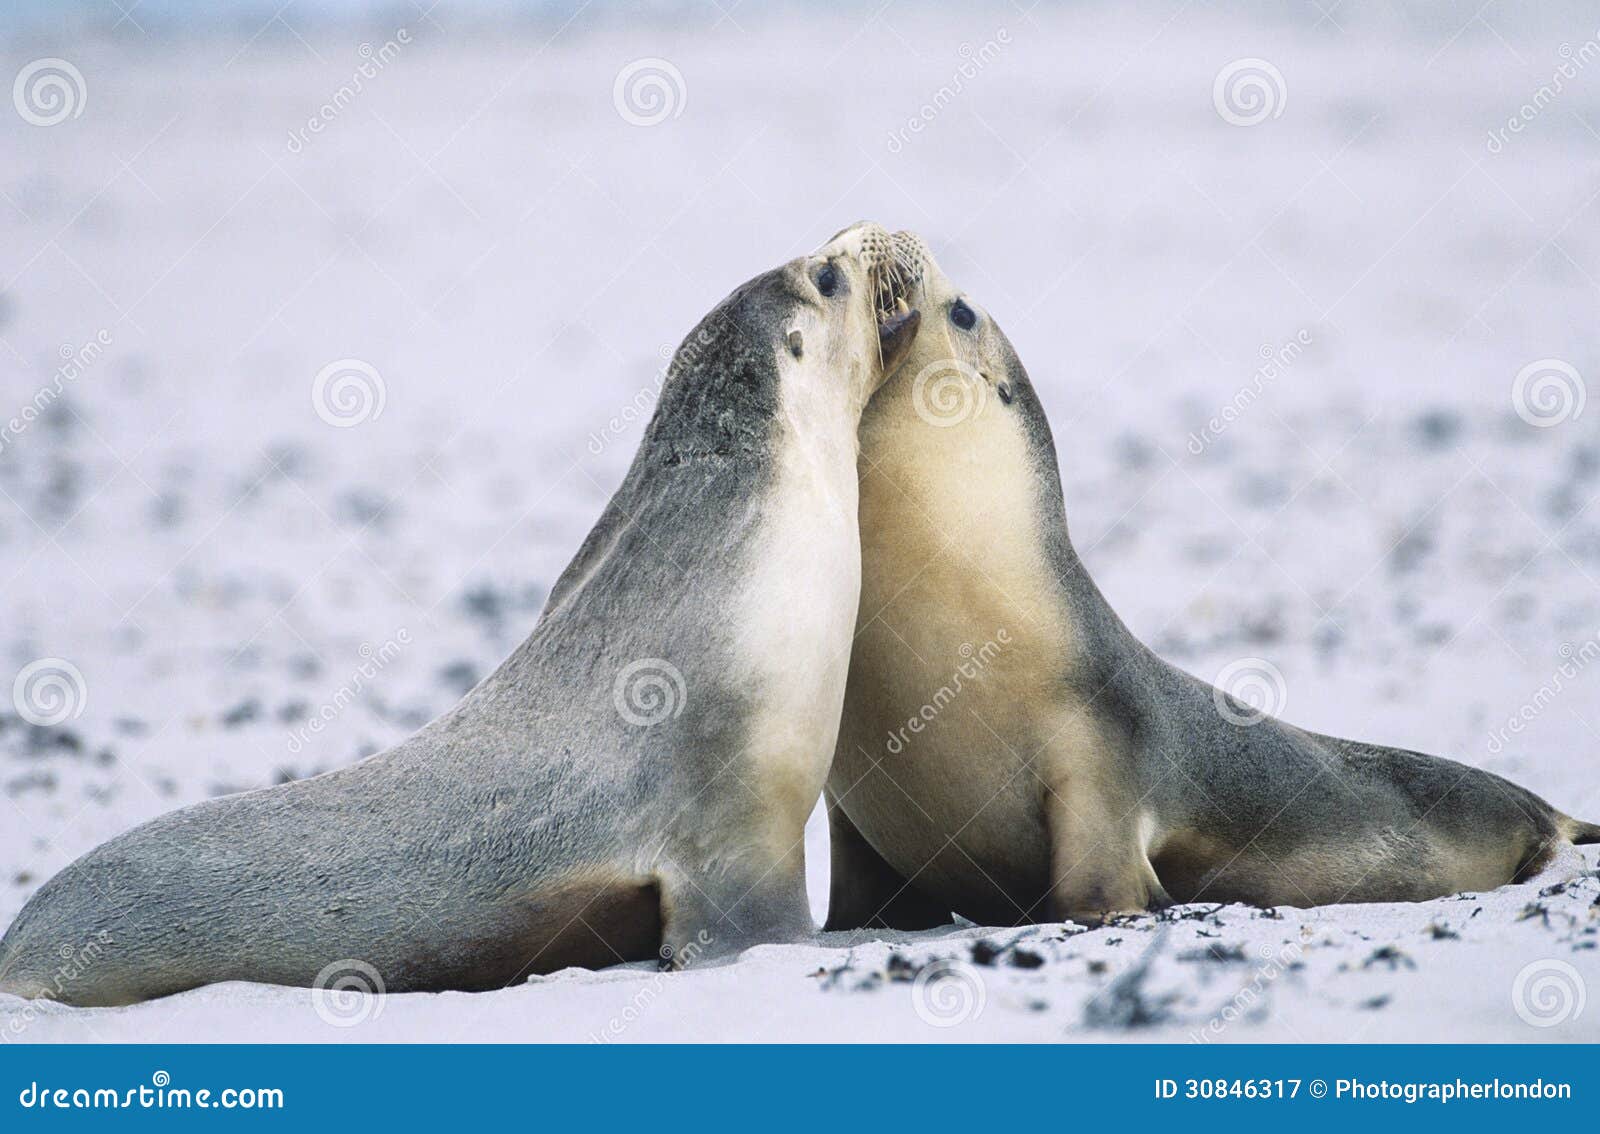 two fur seals bonding on beach